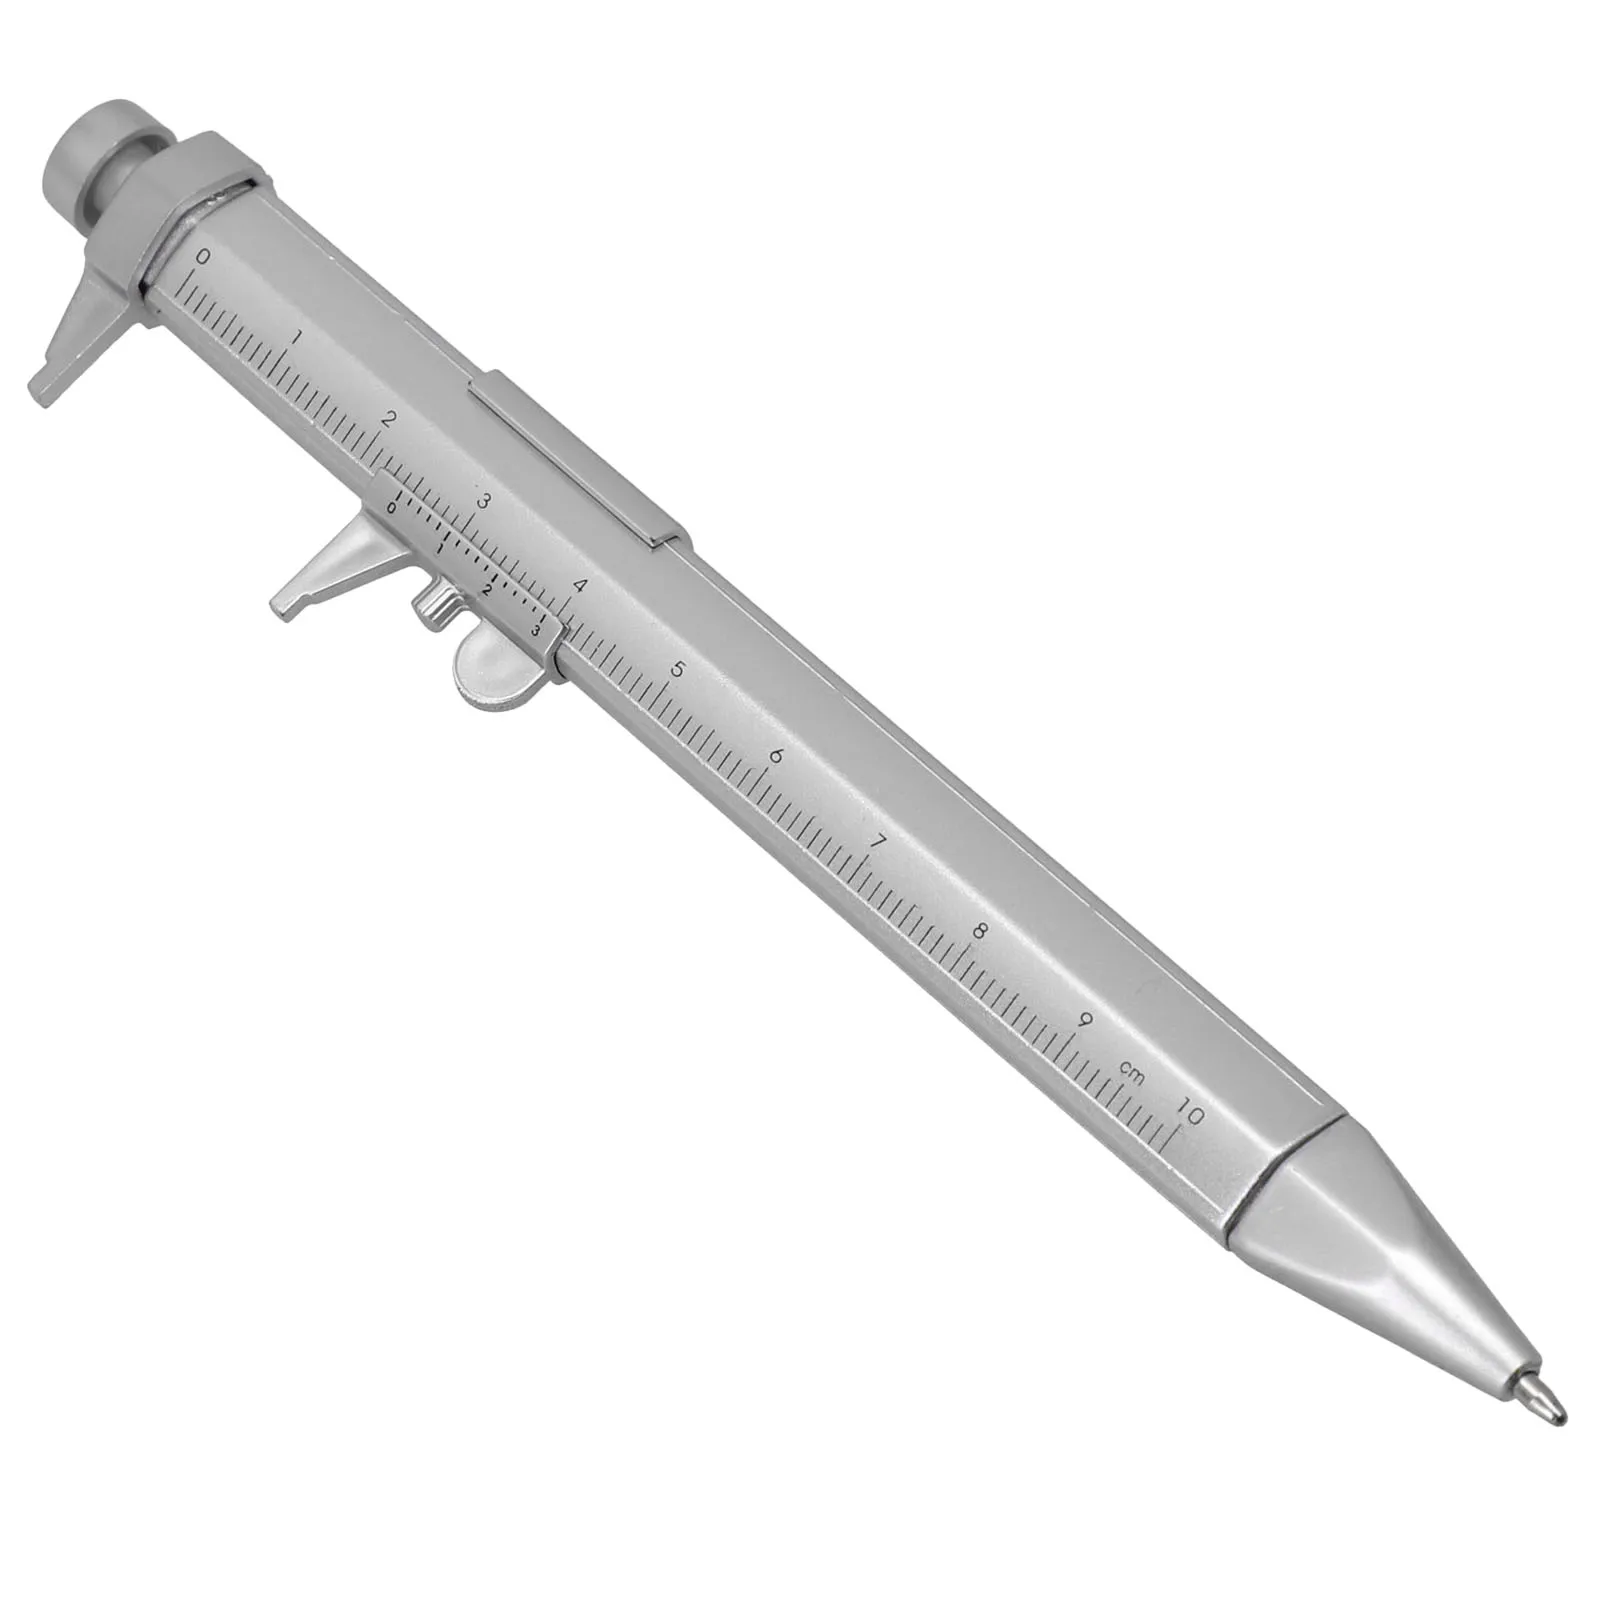 Durable Vernier Caliper Pen Stationery 0-100mm New Plastic Vernier Caliper Blue/Black Refill Blue/Black refill